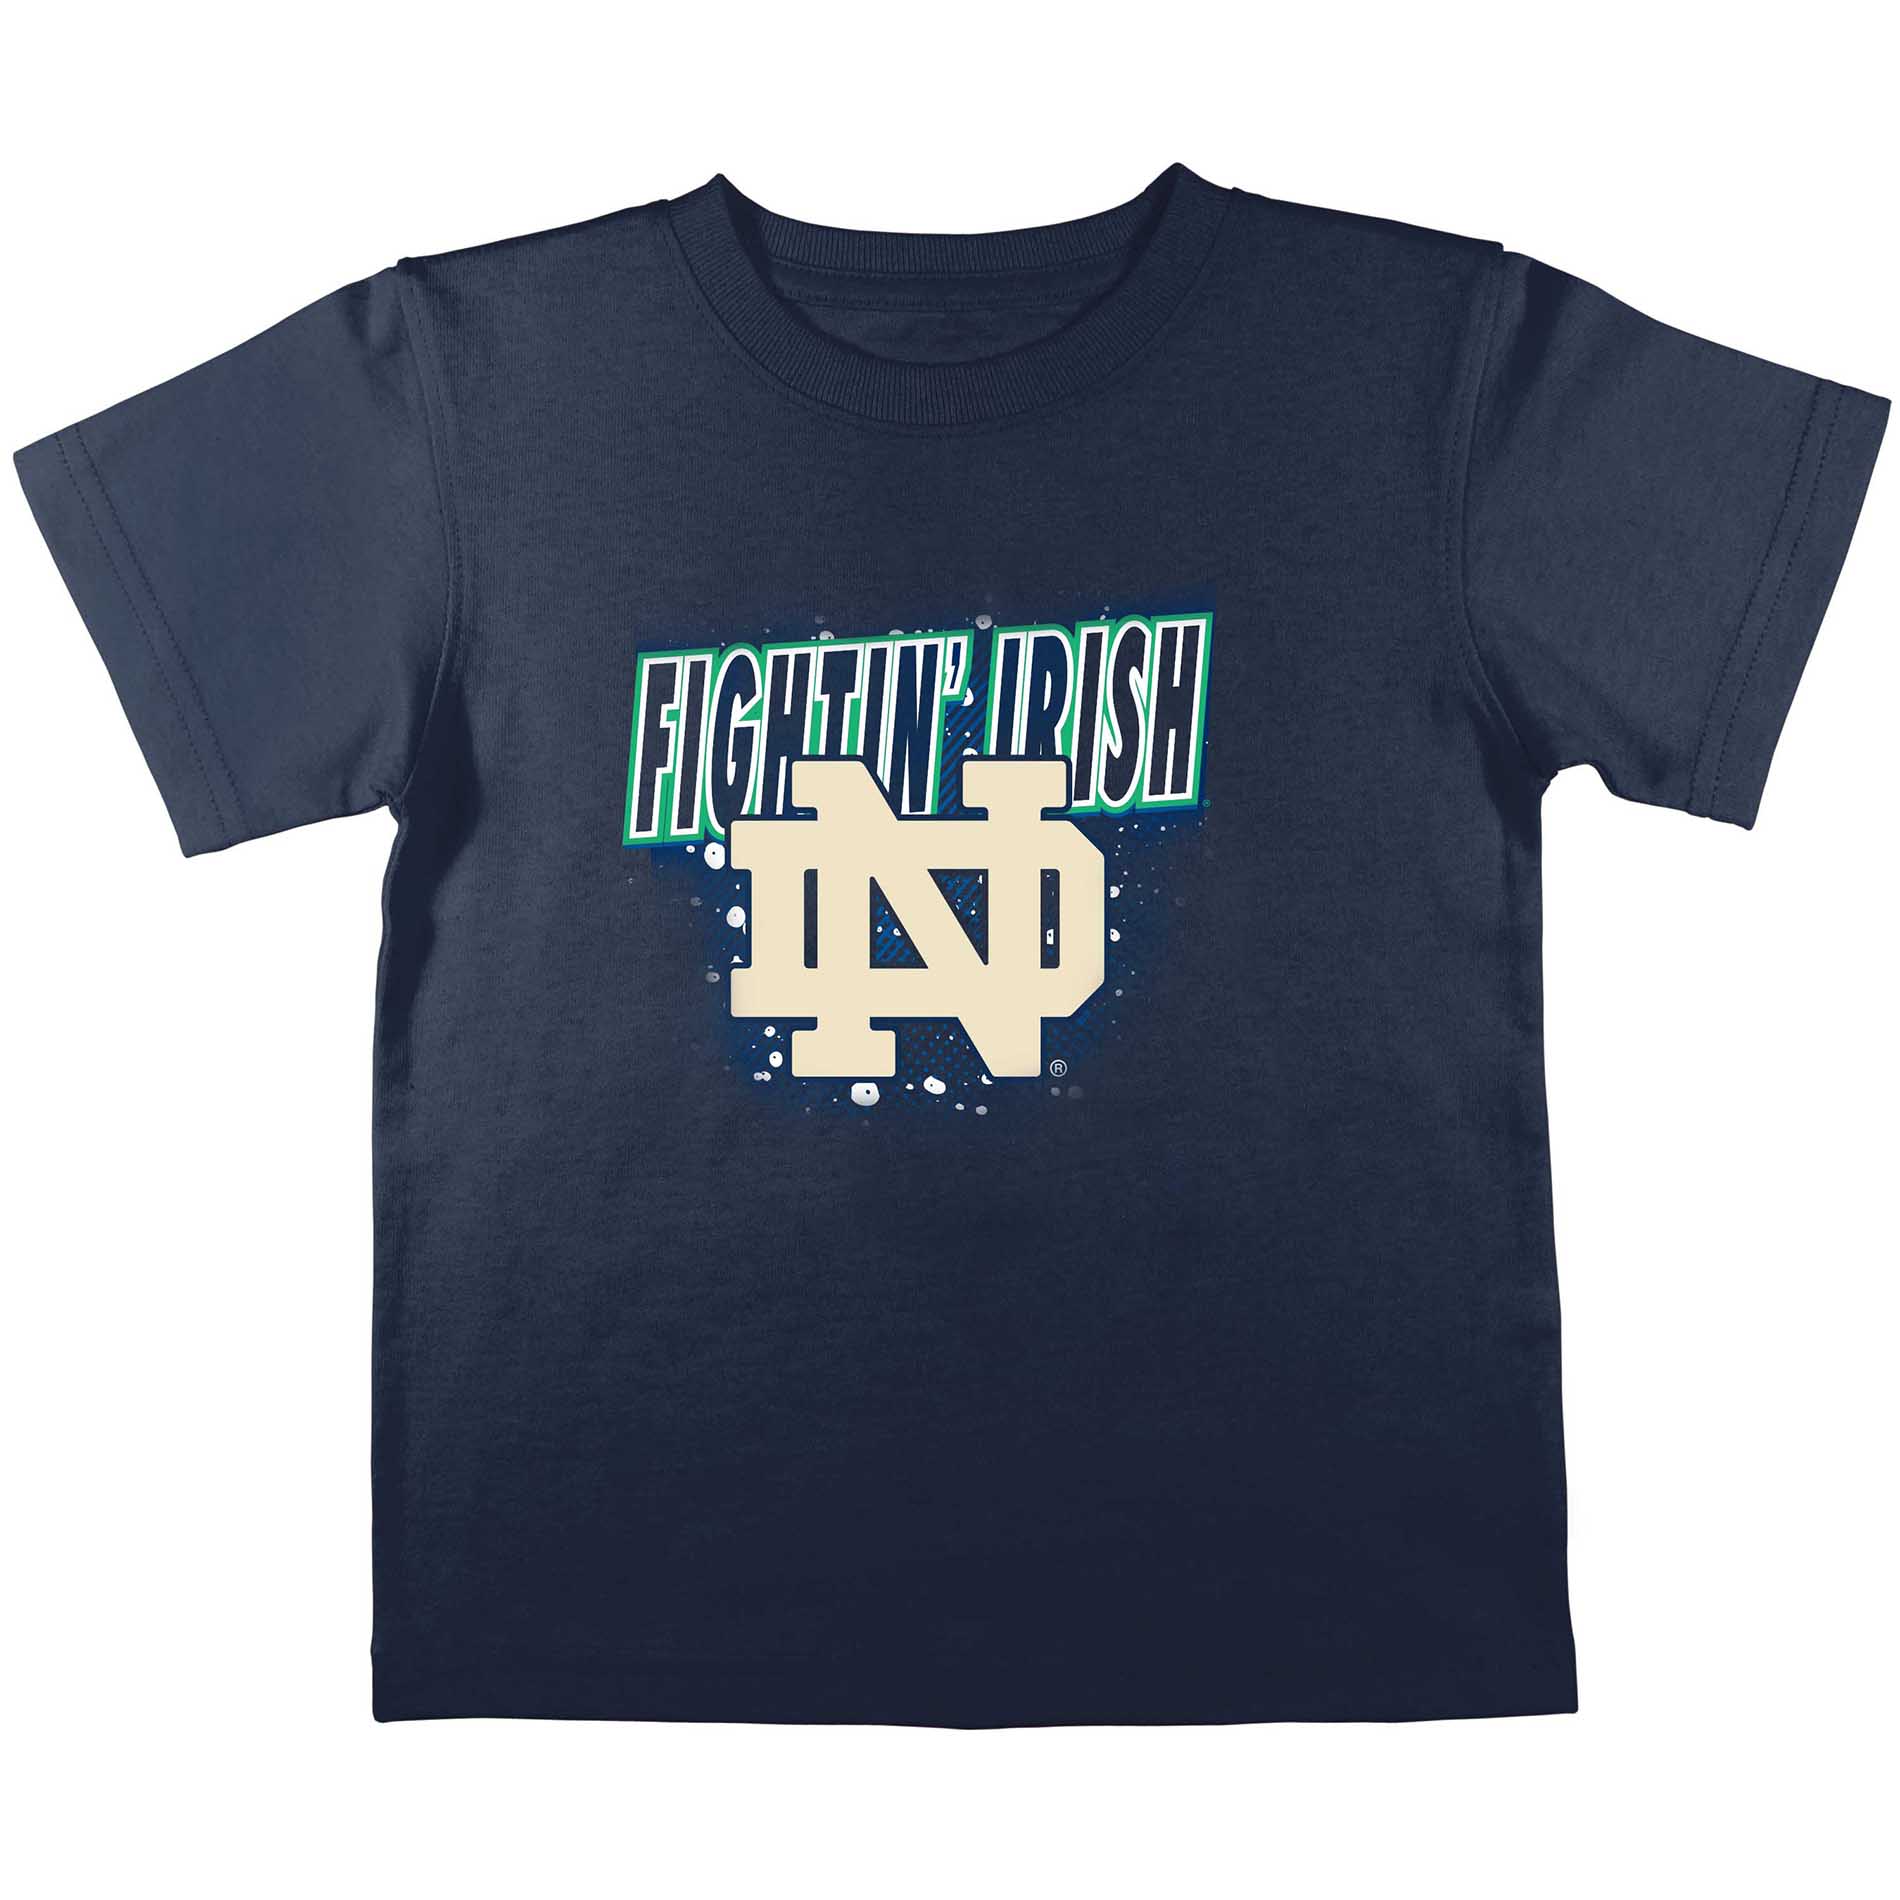 NCAA Youth University of Notre Dame Fighting Irish Short Sleeve Tee